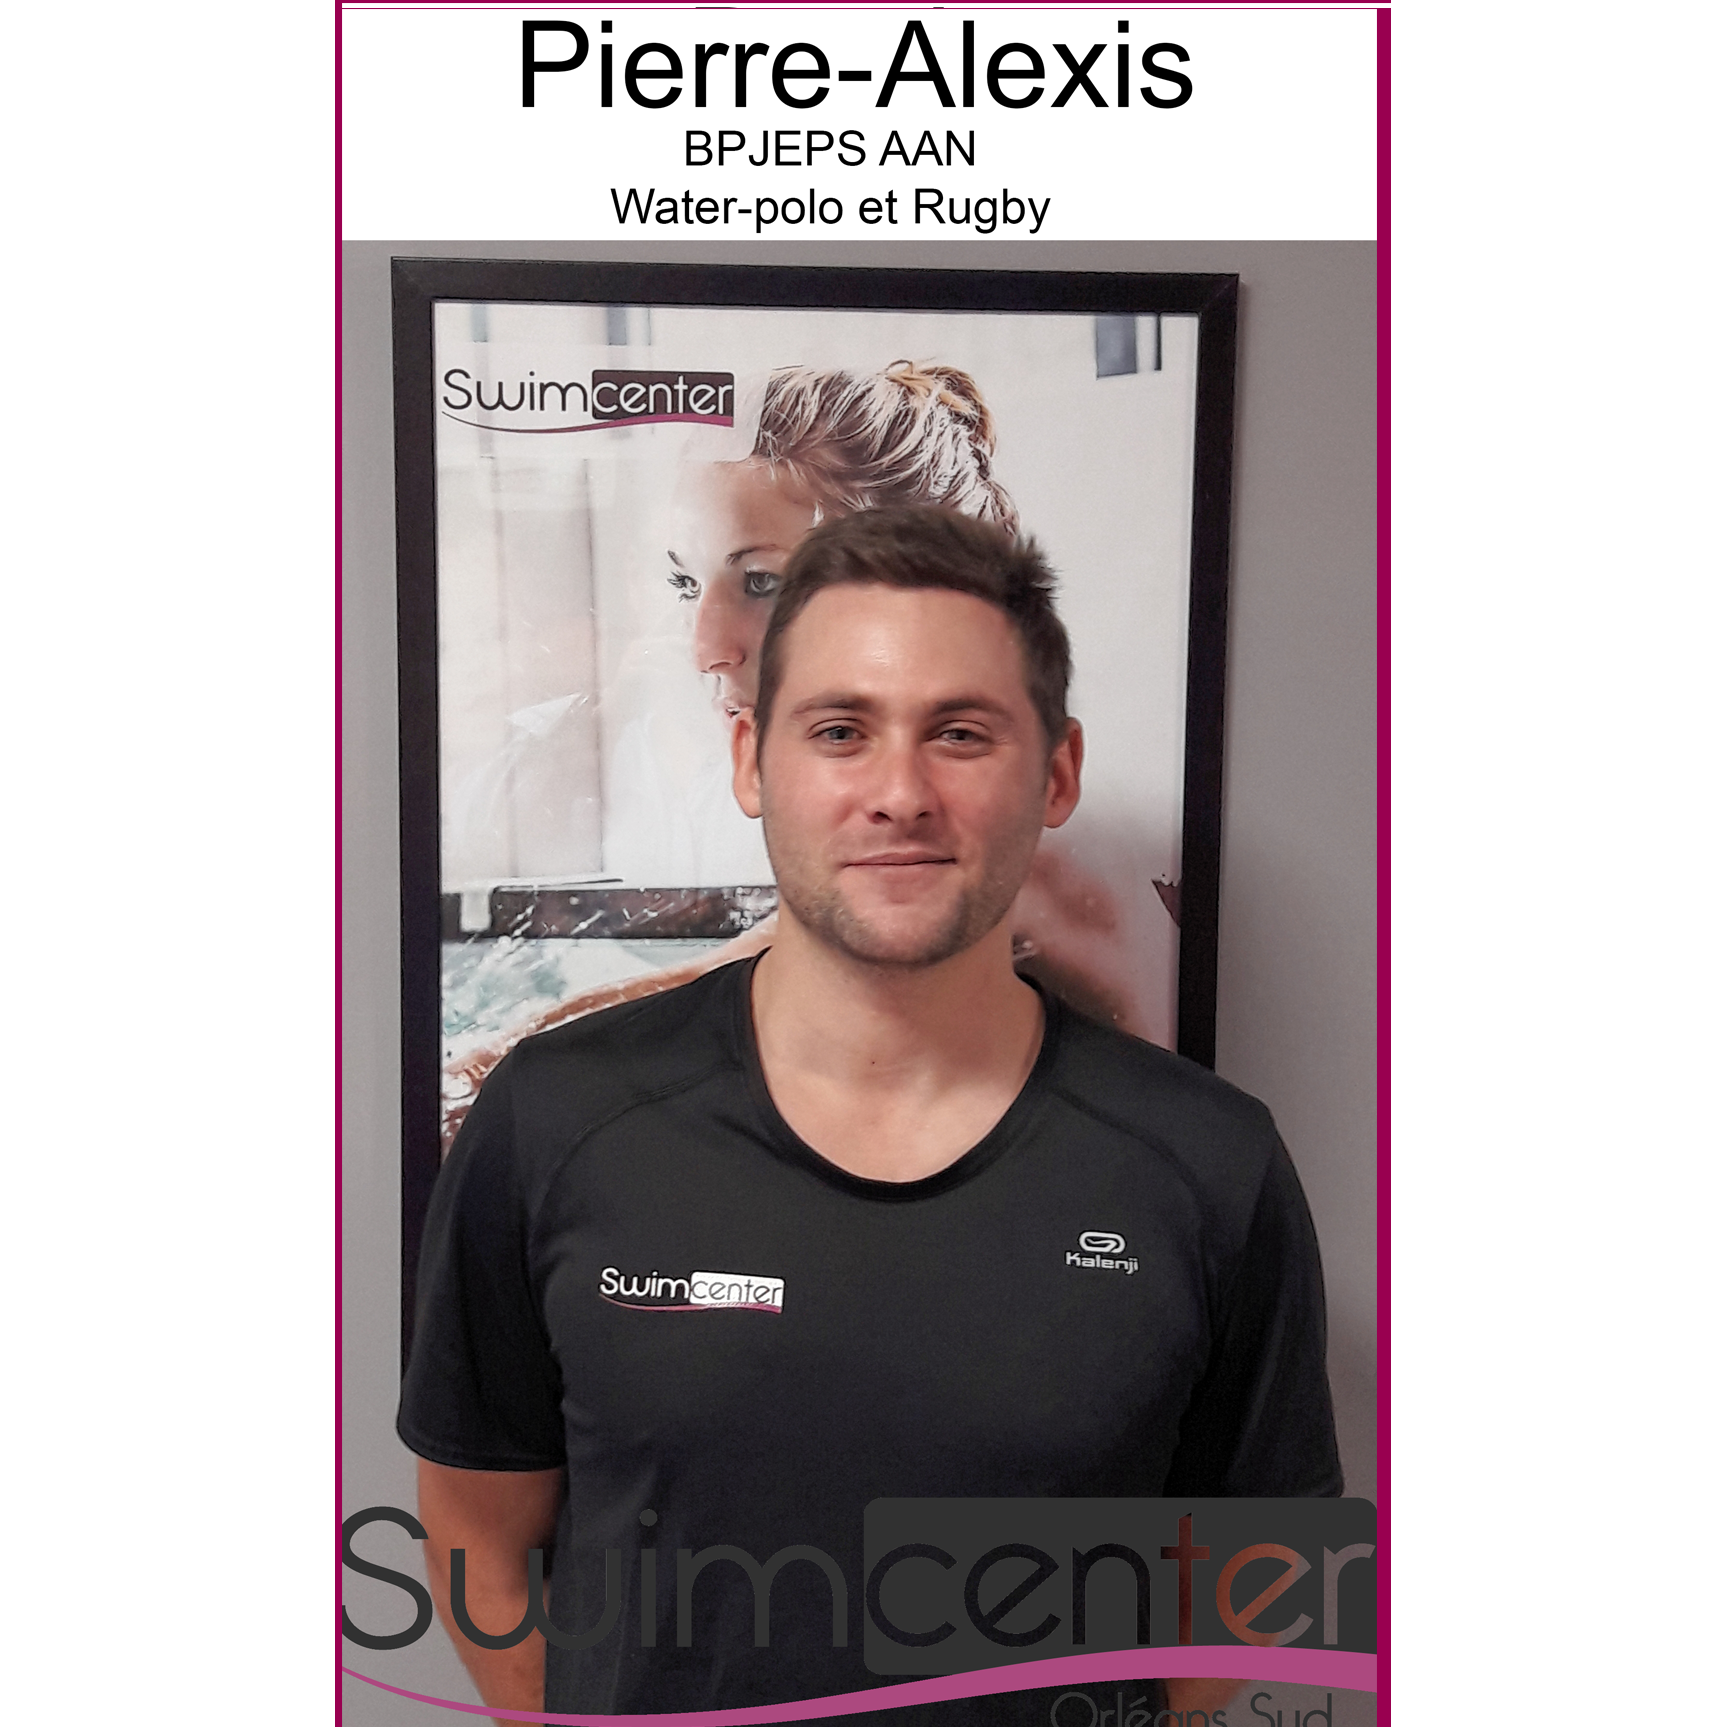 Pierre-Alexis